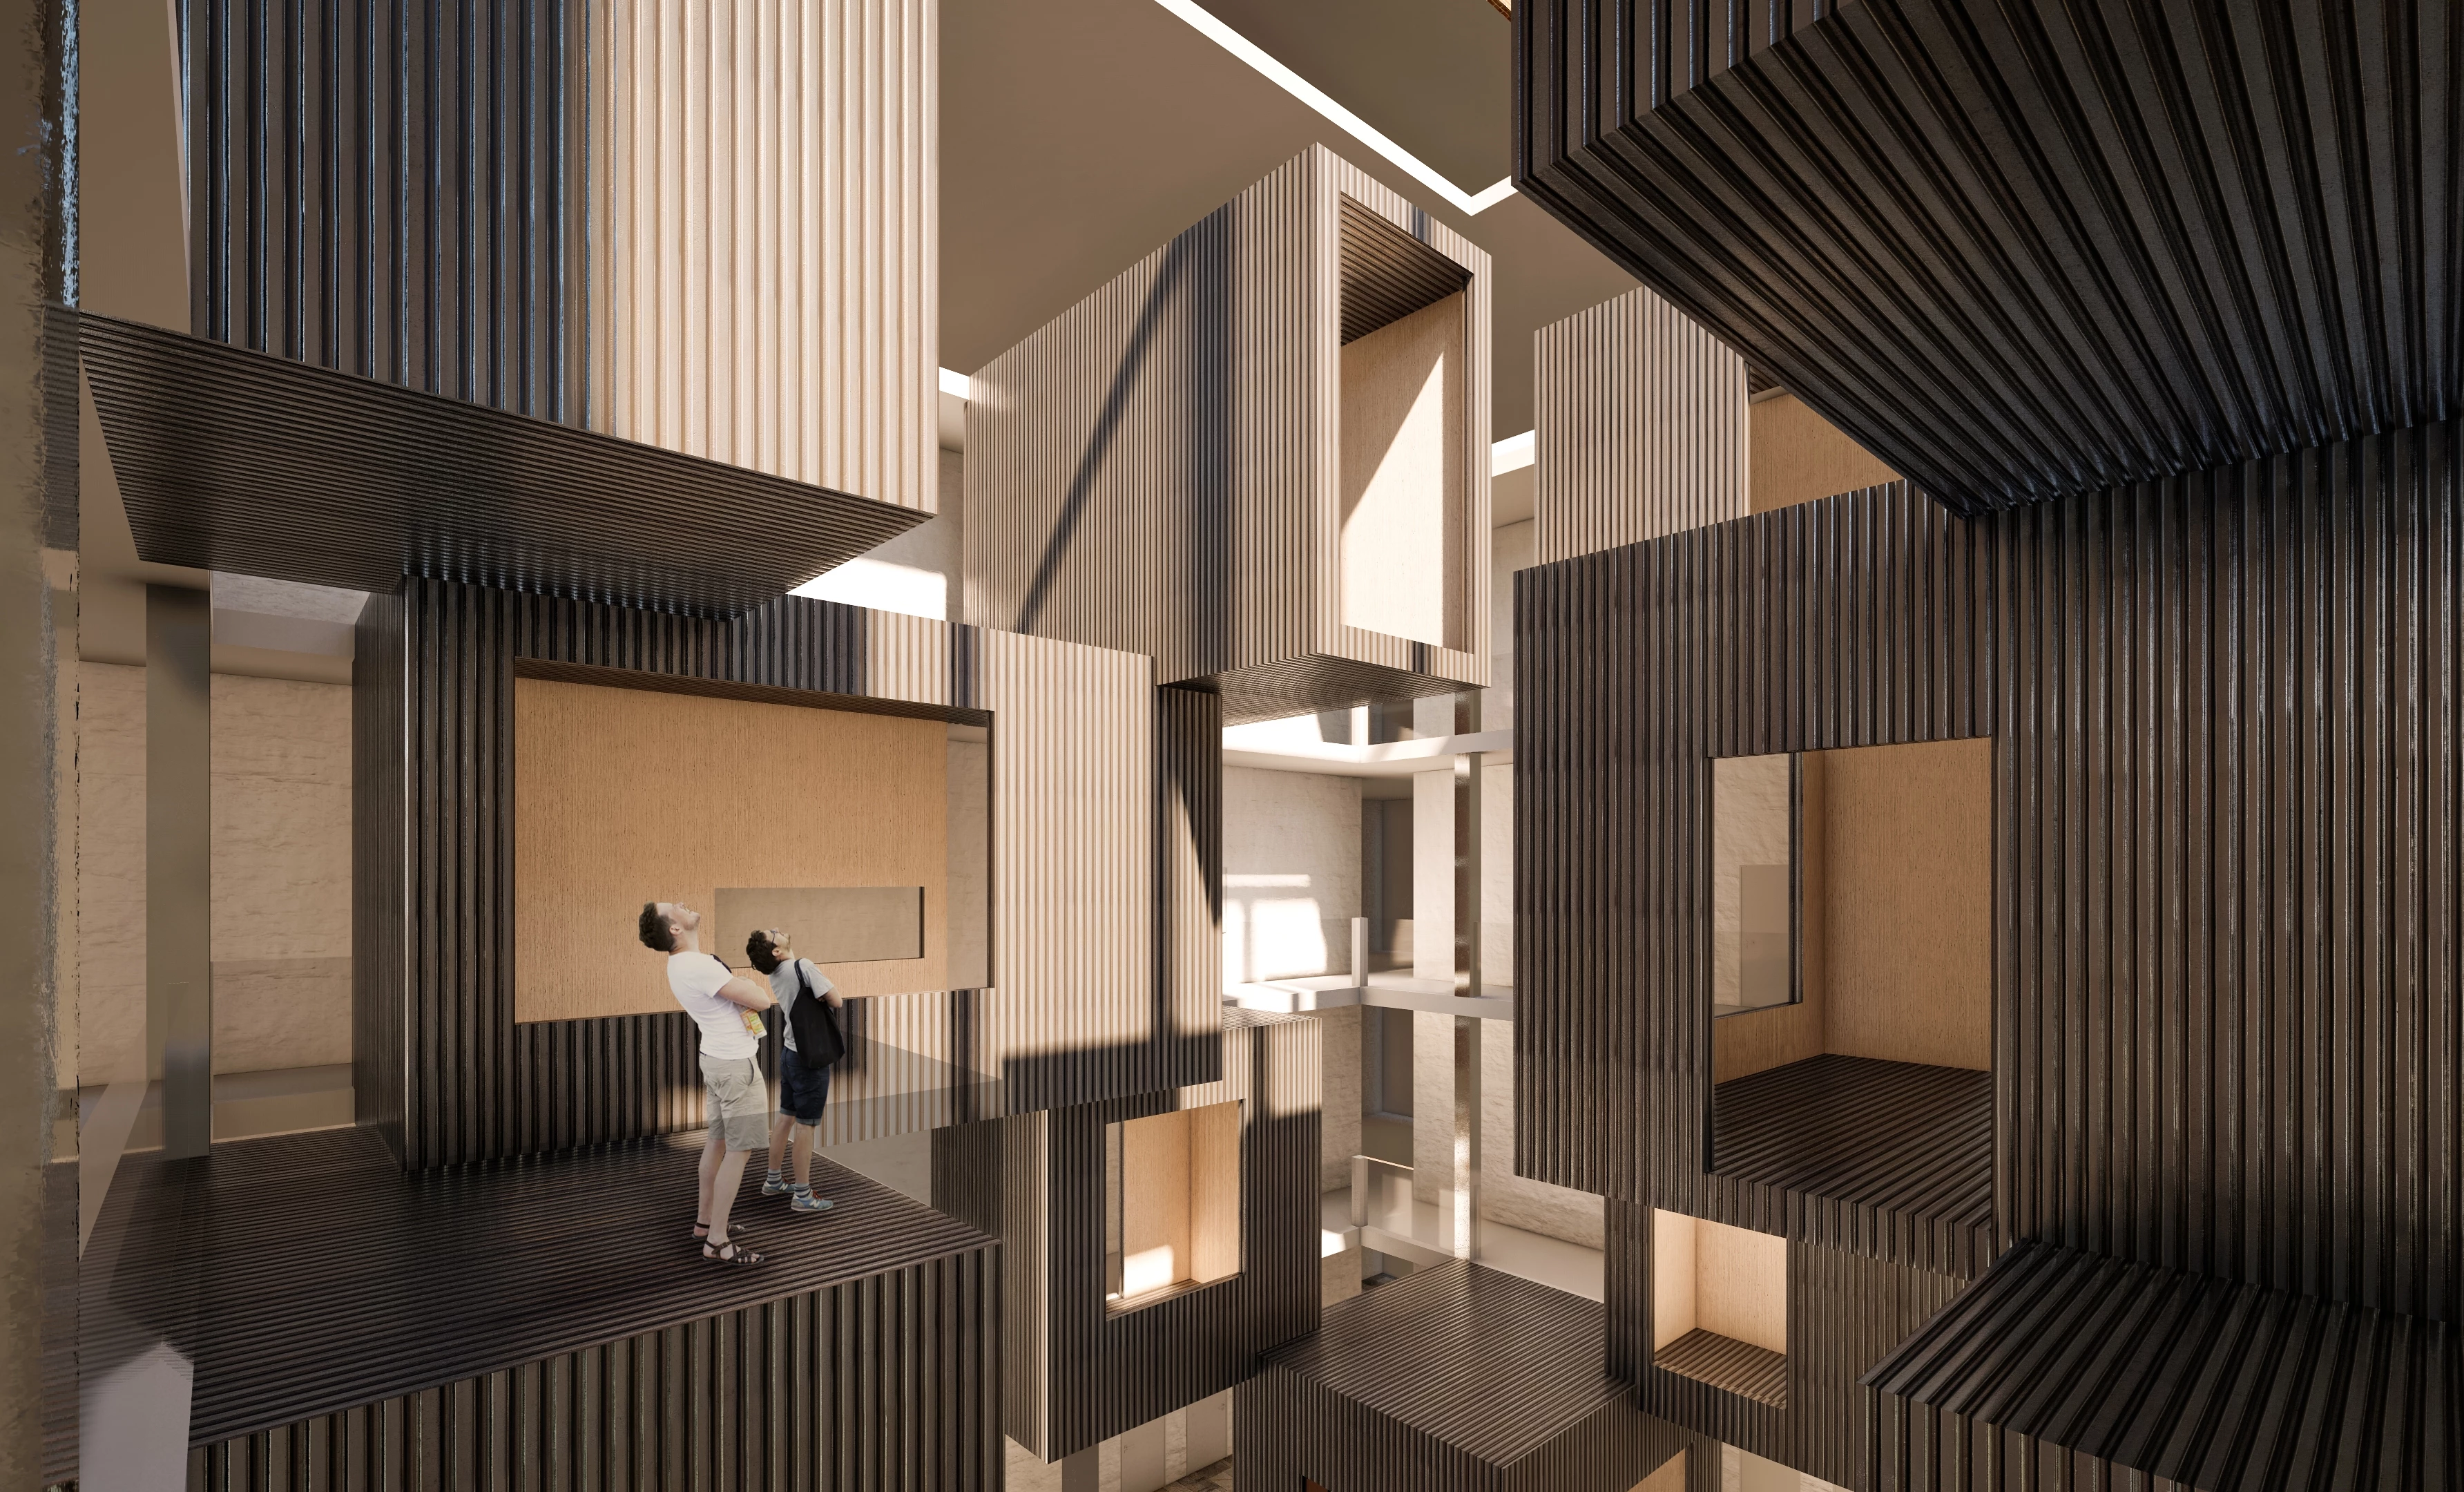 Bfa Interior Design Built Environments School Of Visual Arts Sva Nyc